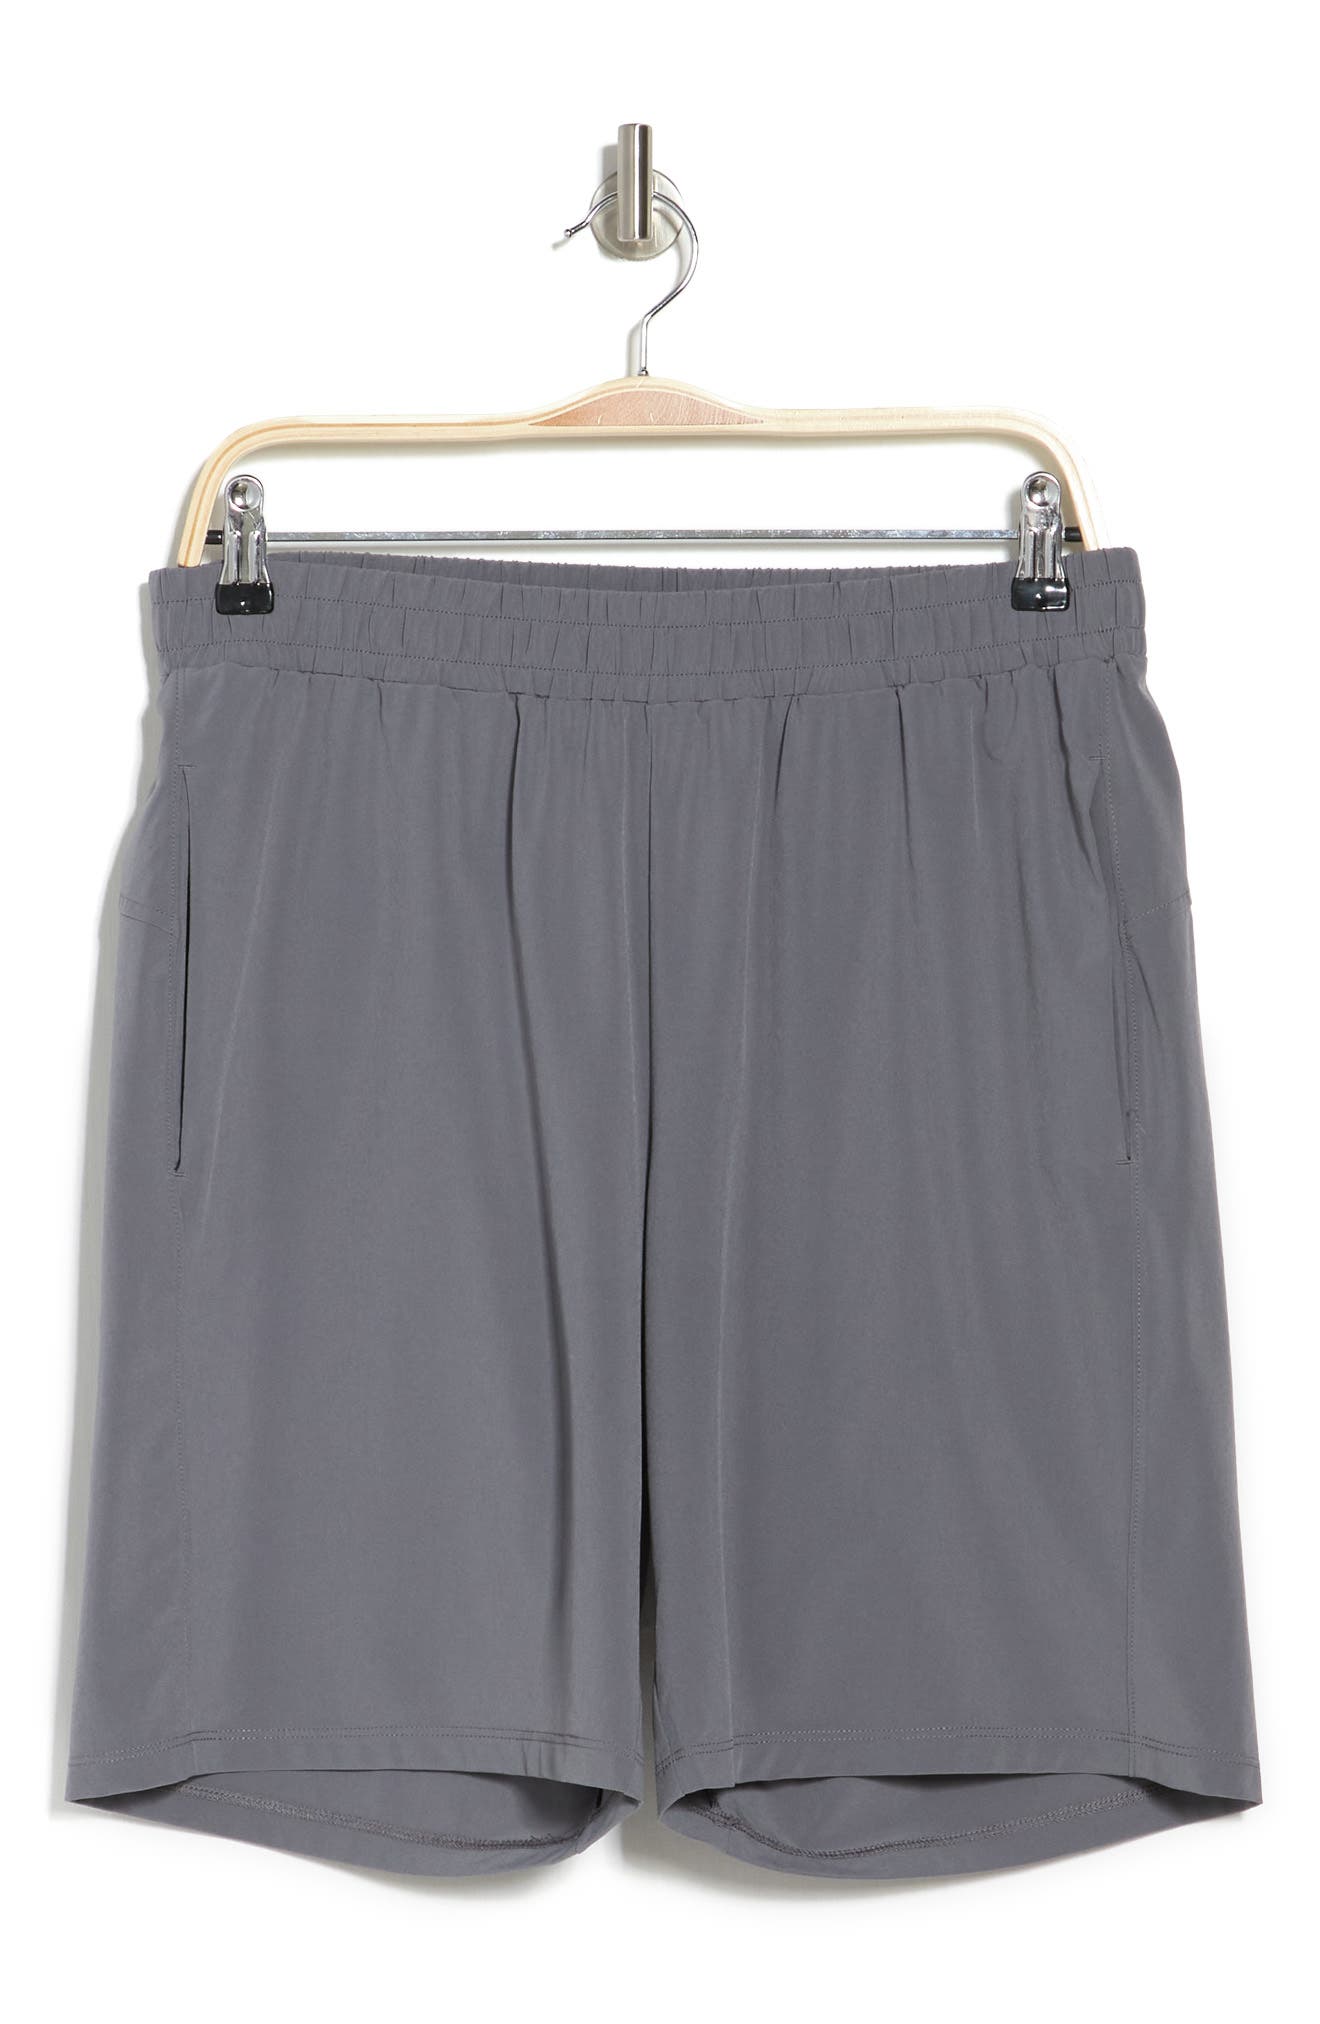 Z By Zella Traverse Woven Shorts In Grey Shade